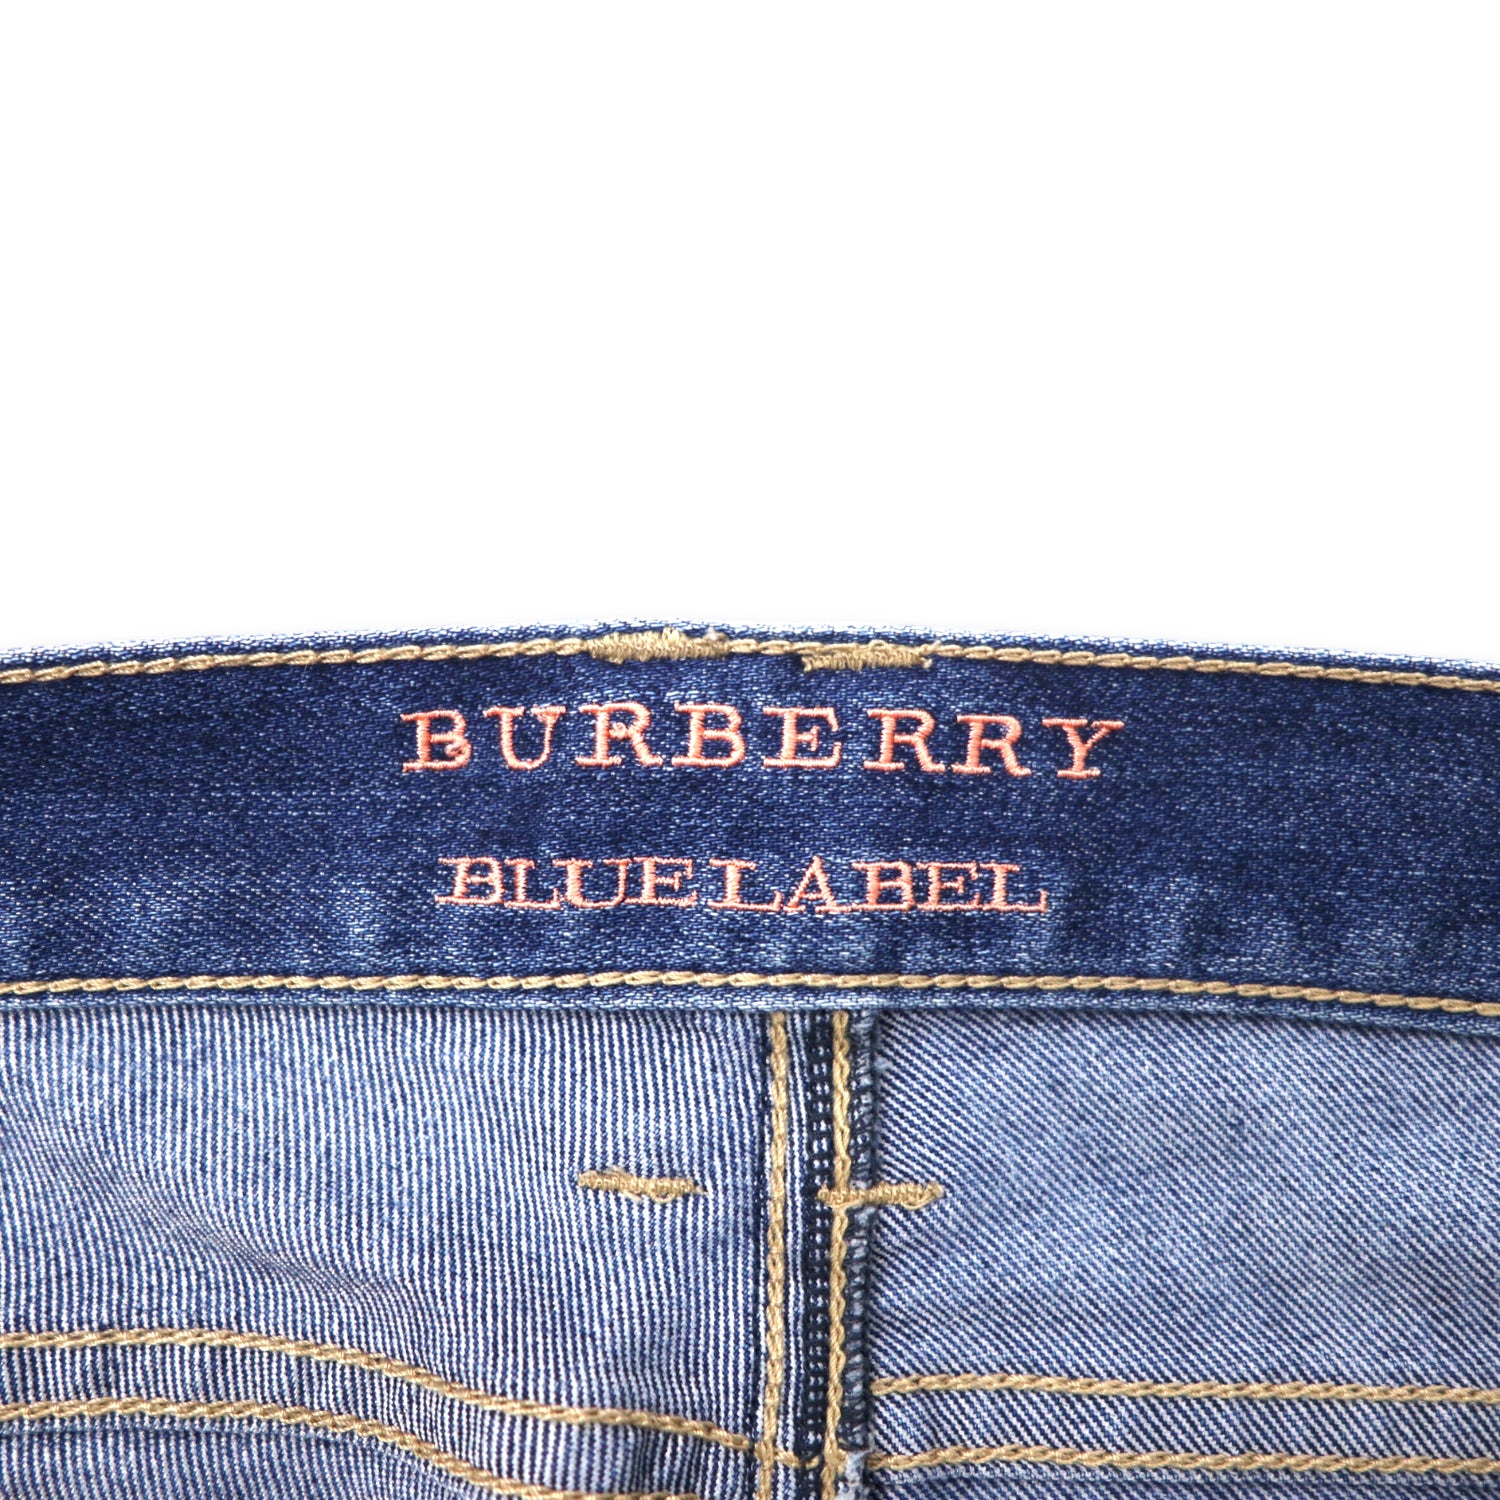 BURBERRY BLUE LABEL Slimfit Skini Jeans Denim Pants 36 Blue Cotton 